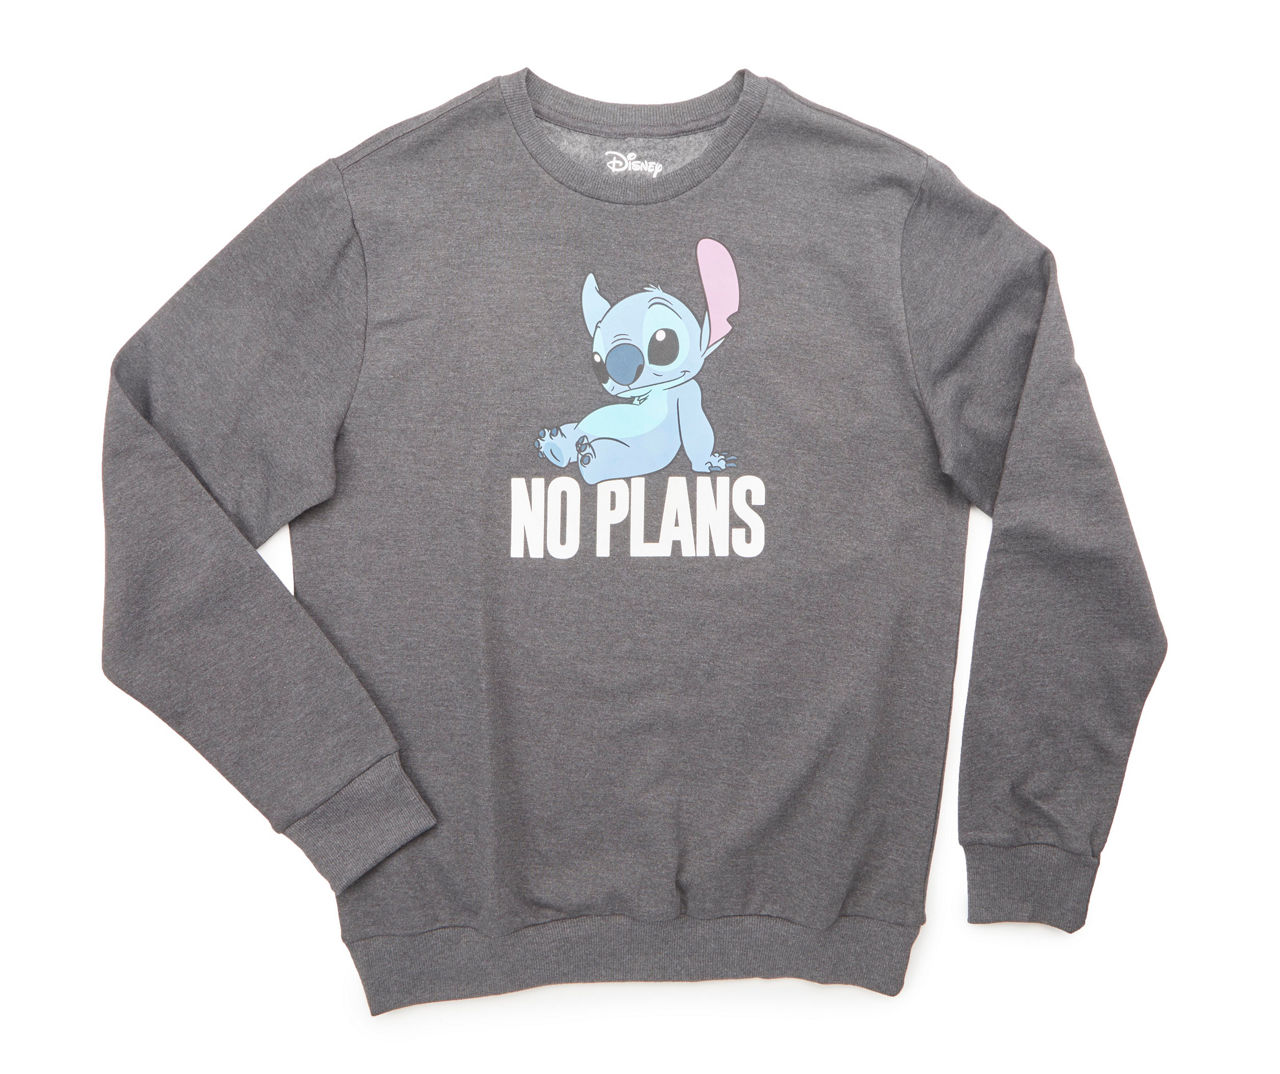 Men's Size X-Large "No Plans" Charcoal Heather Lilo & Stitch Long-Sleeve Fleece Sweatshirt